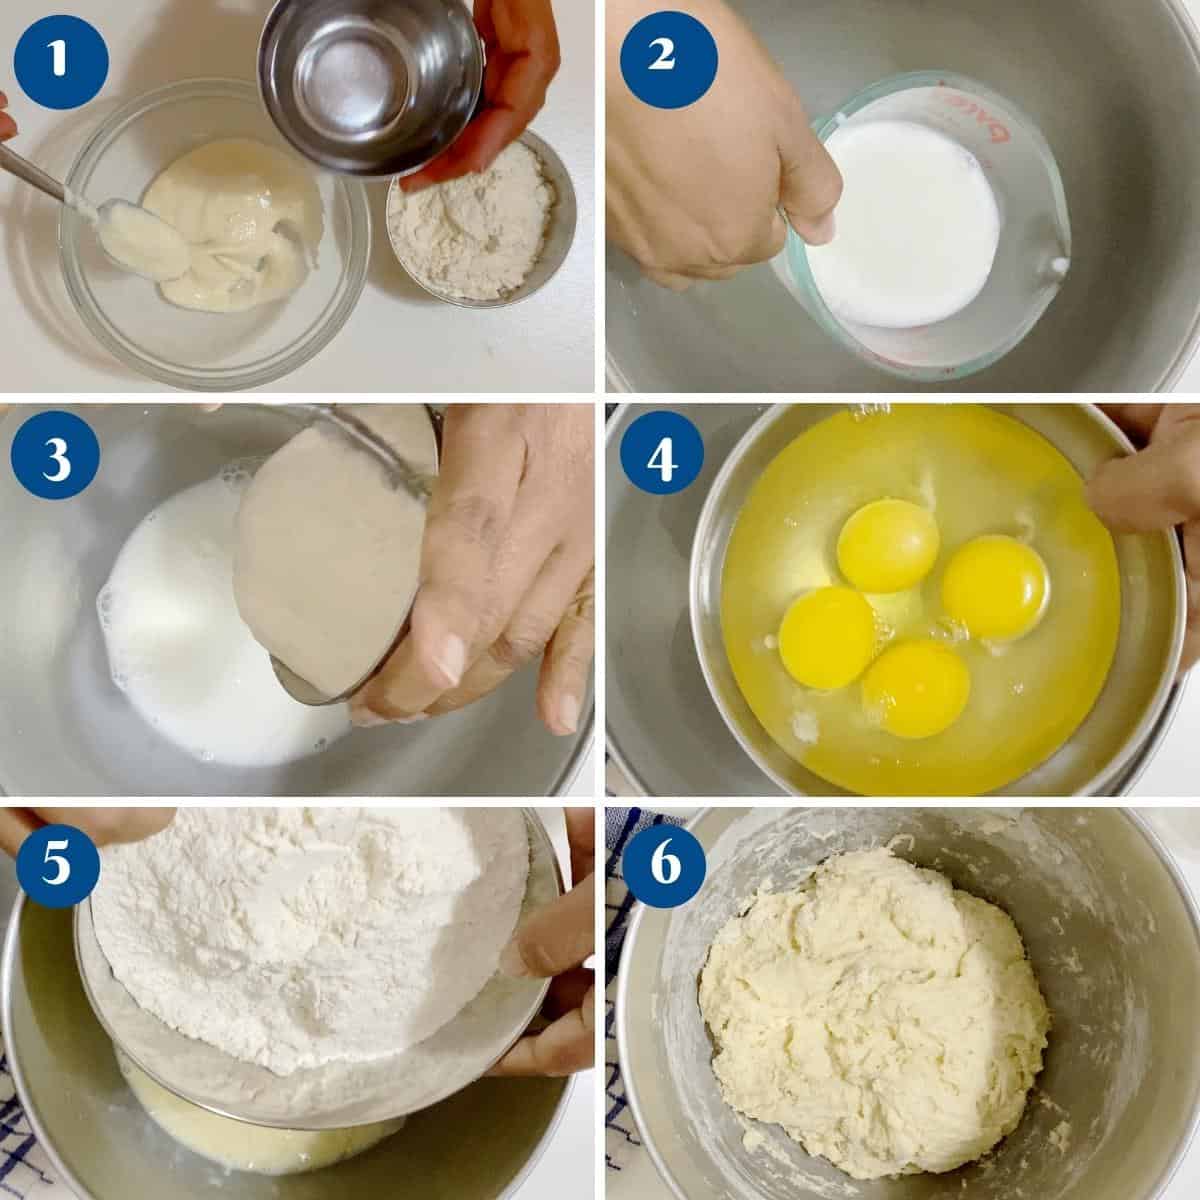 Progress pictures for making sourdough brioche buns.